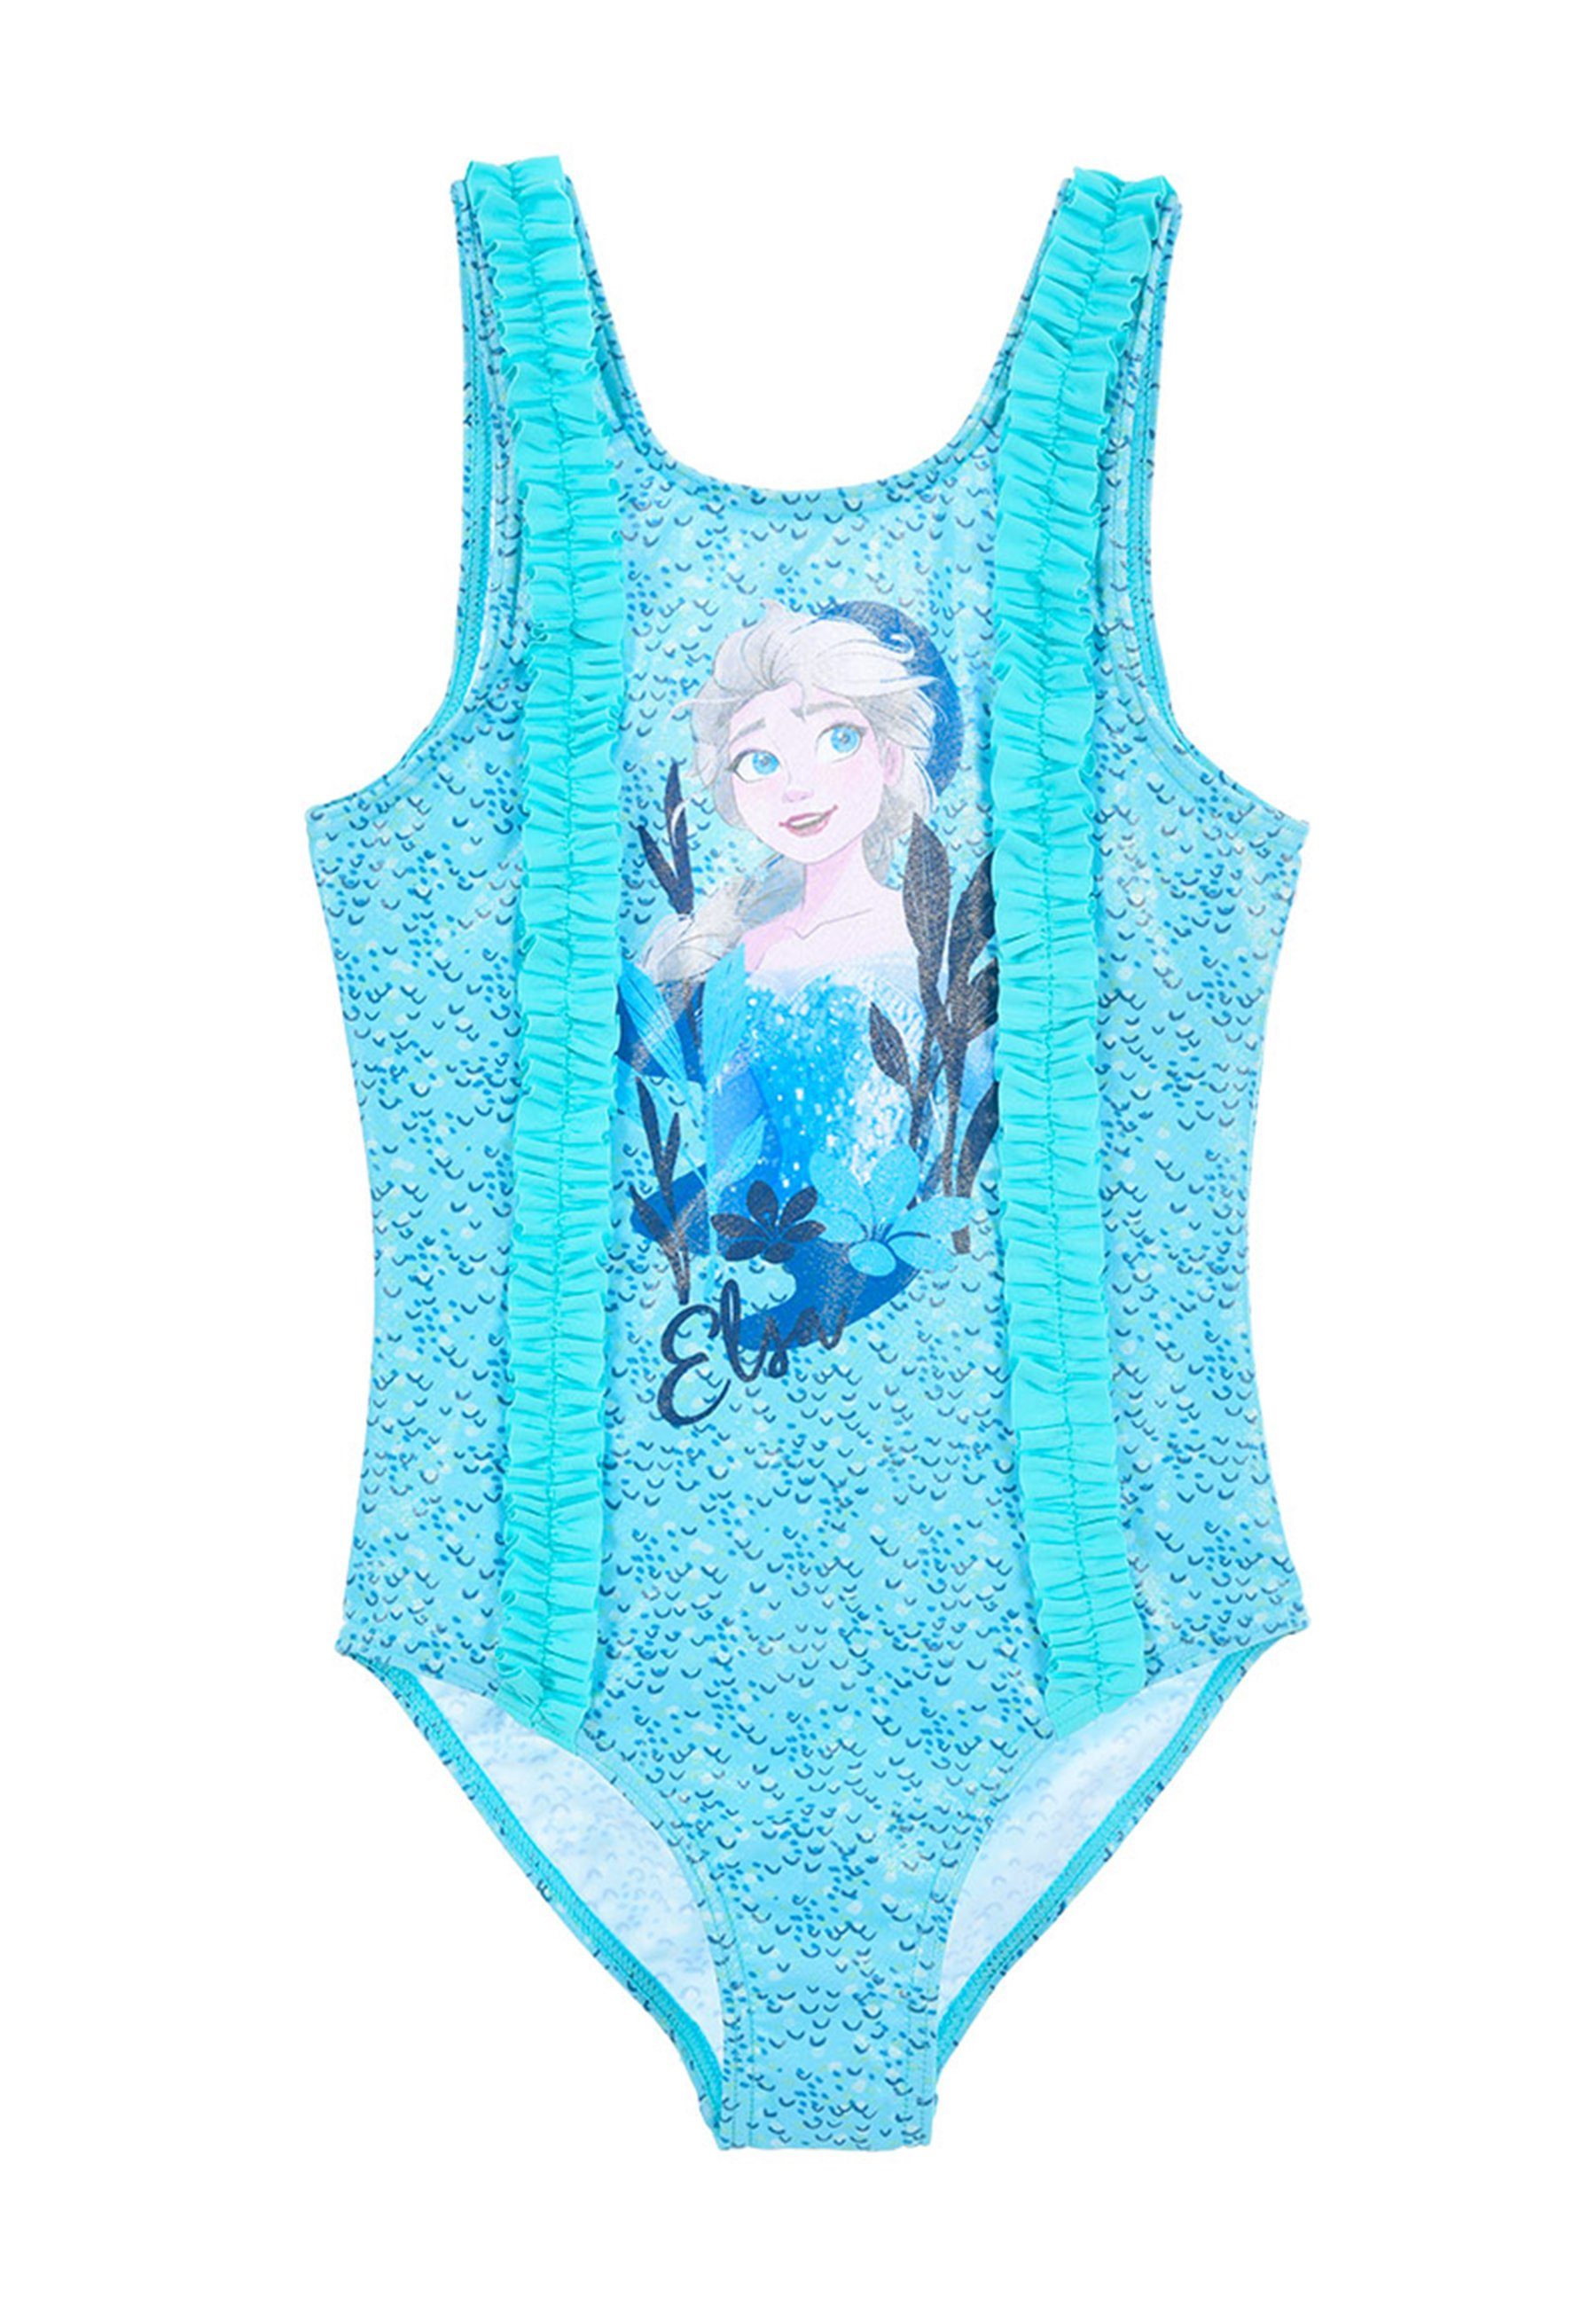 Elsa Frozen Bademode Mädchen Badeanzug Badeanzug Einteiler Disney